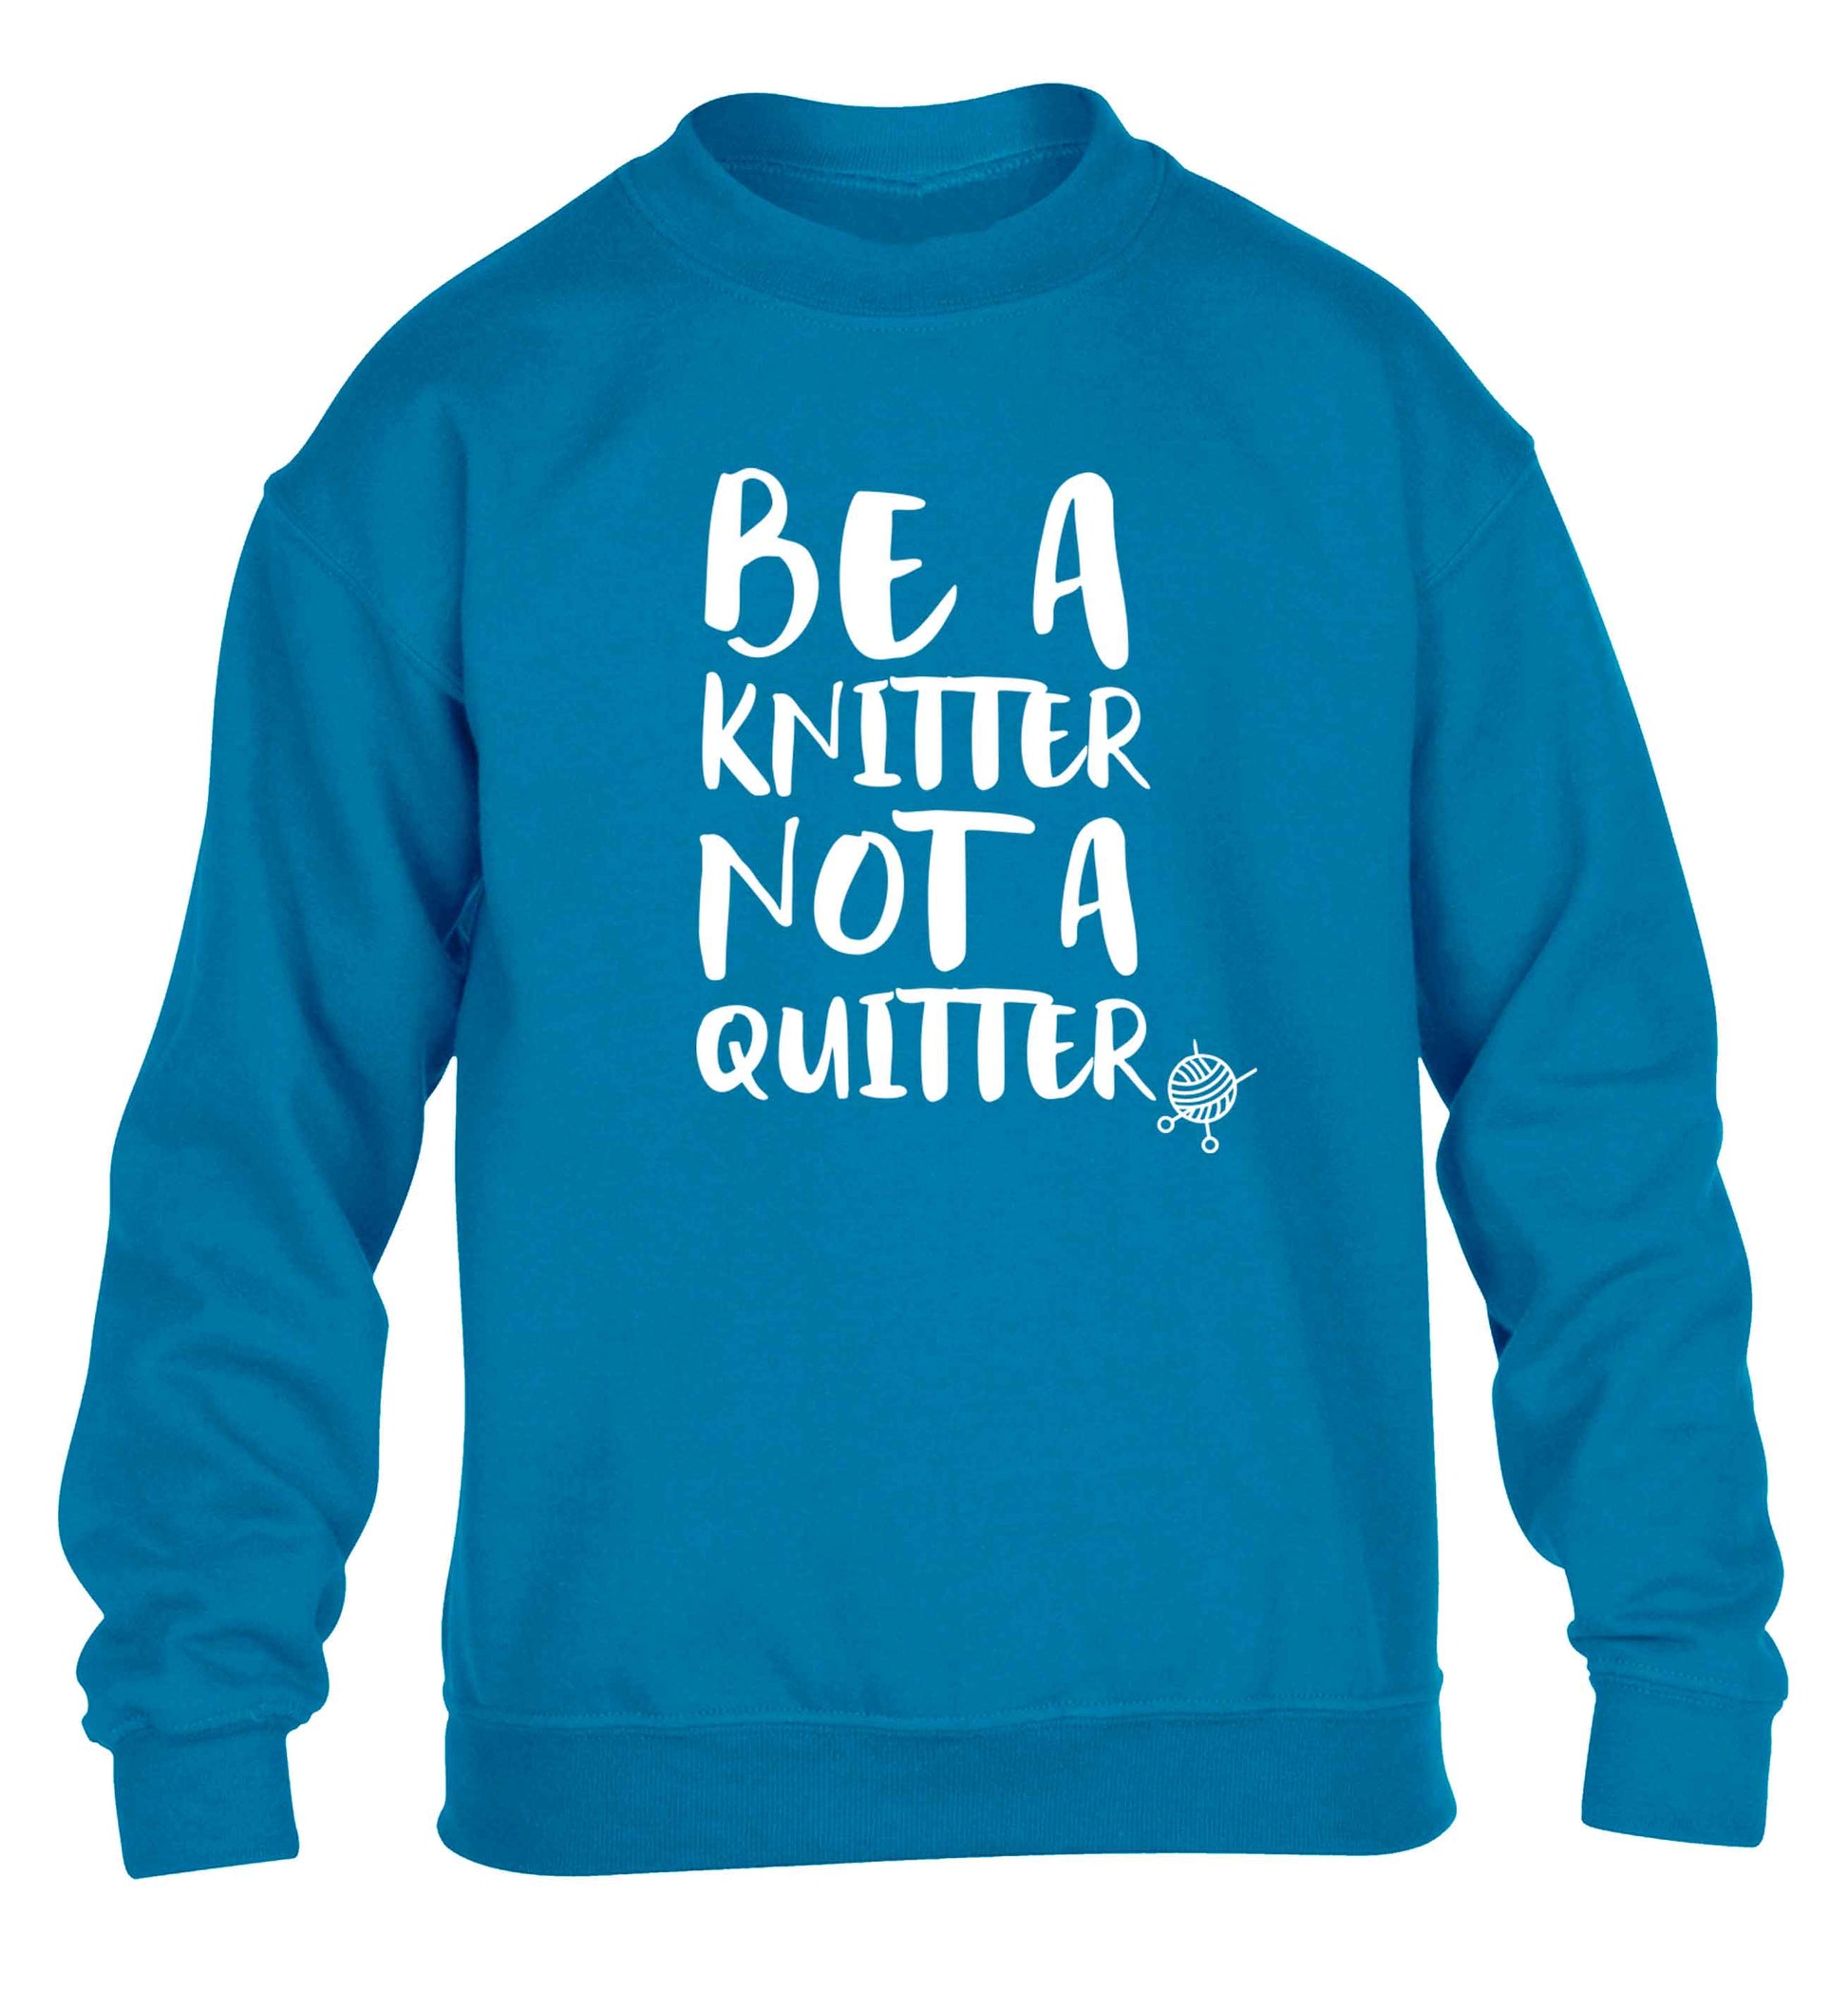 Be a knitter not a quitter children's blue sweater 12-13 Years